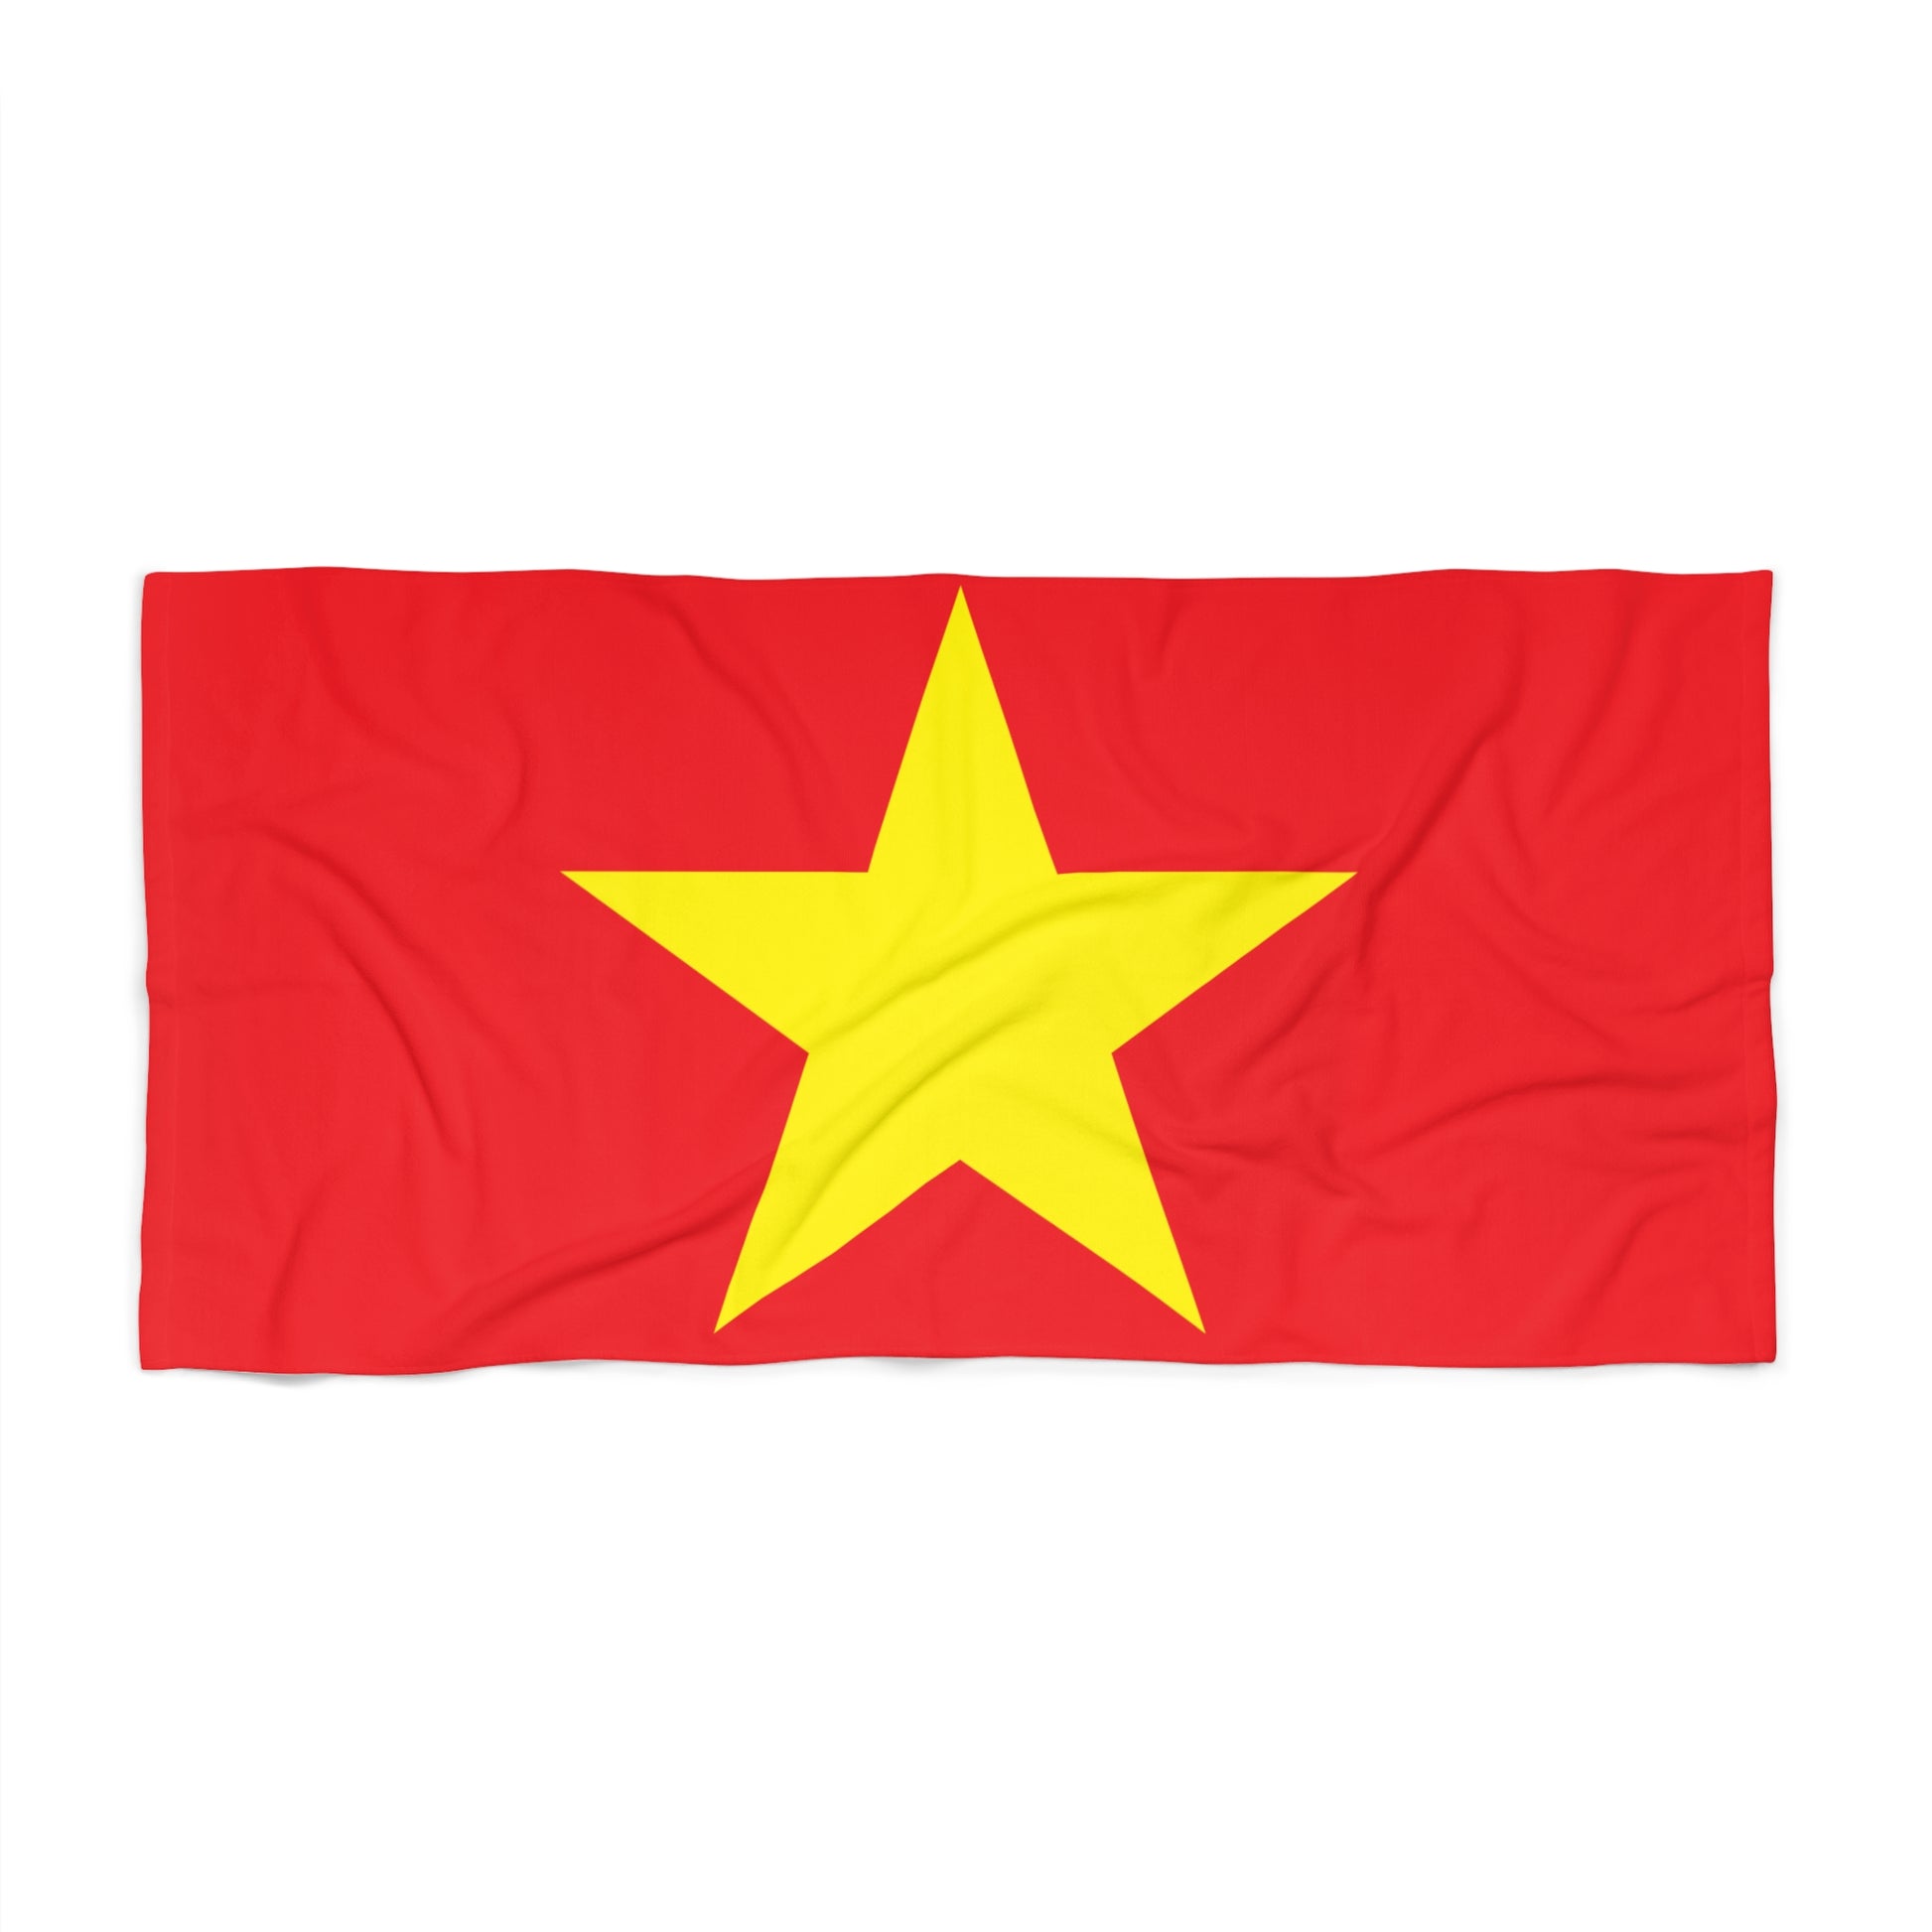 VIETNAM Flag Beach Towel | Quality & Long Lasting - 2 Sizes - seen on celebs